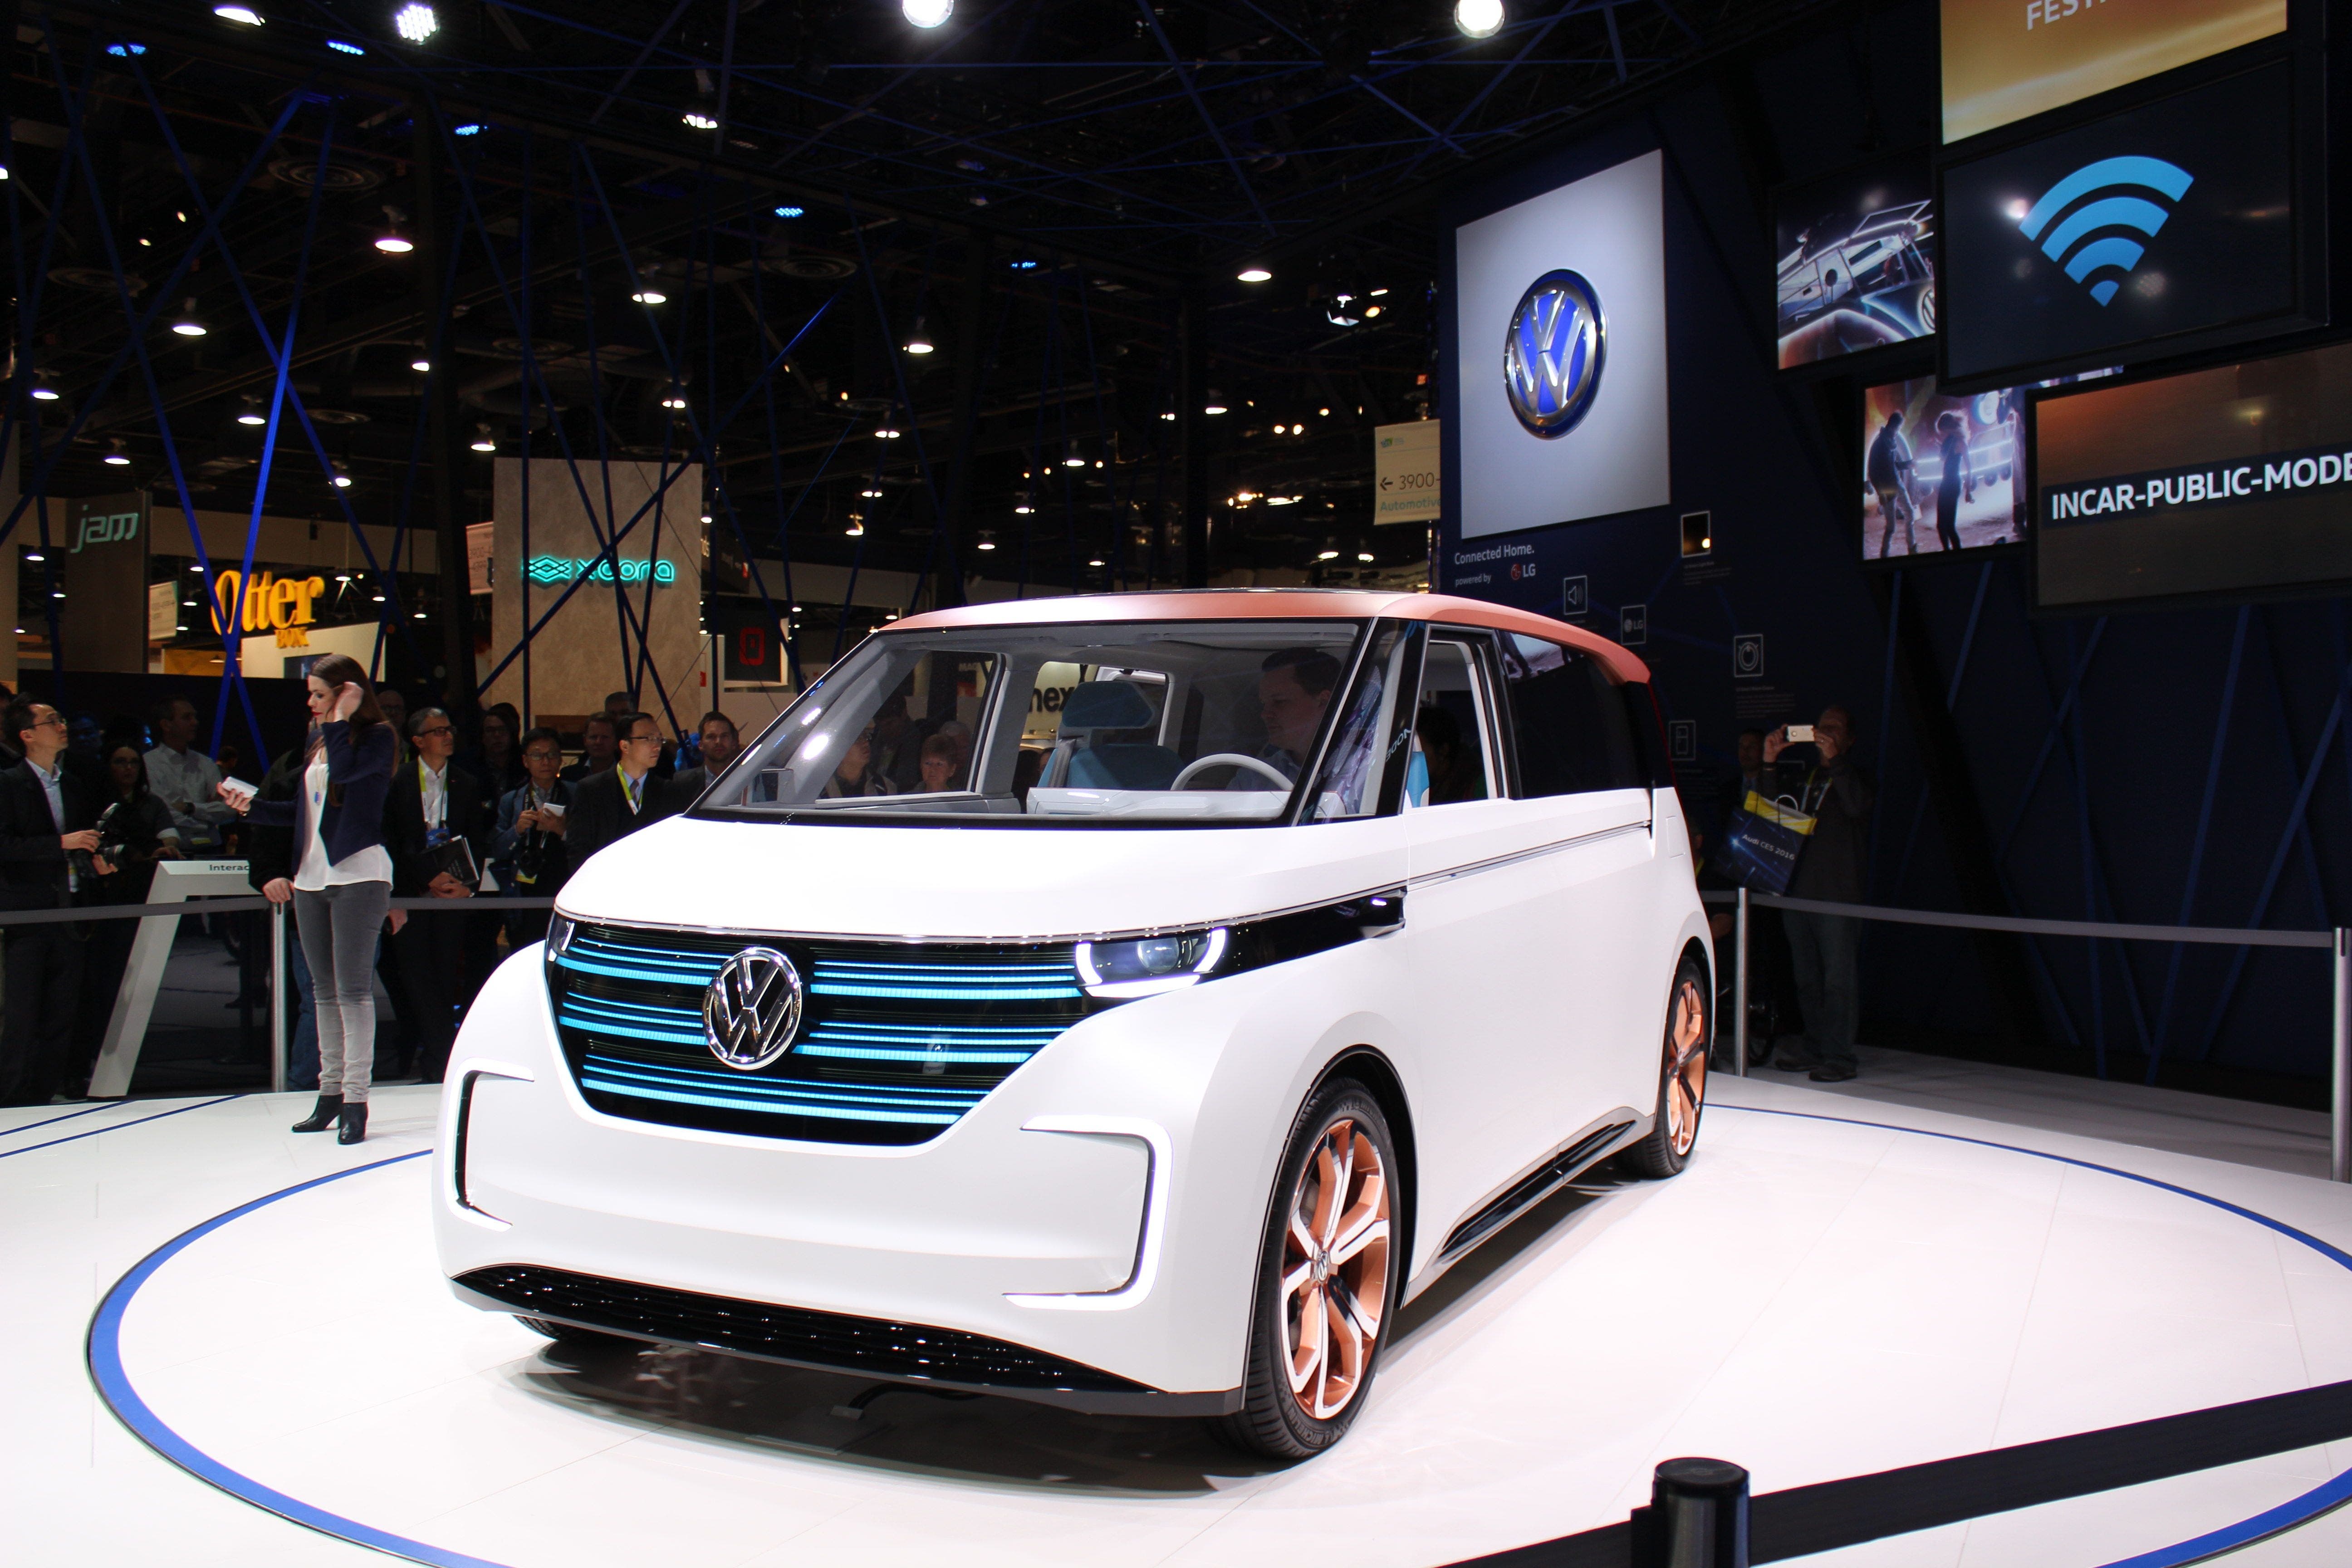 Volkswagen e-up! exterior specifications